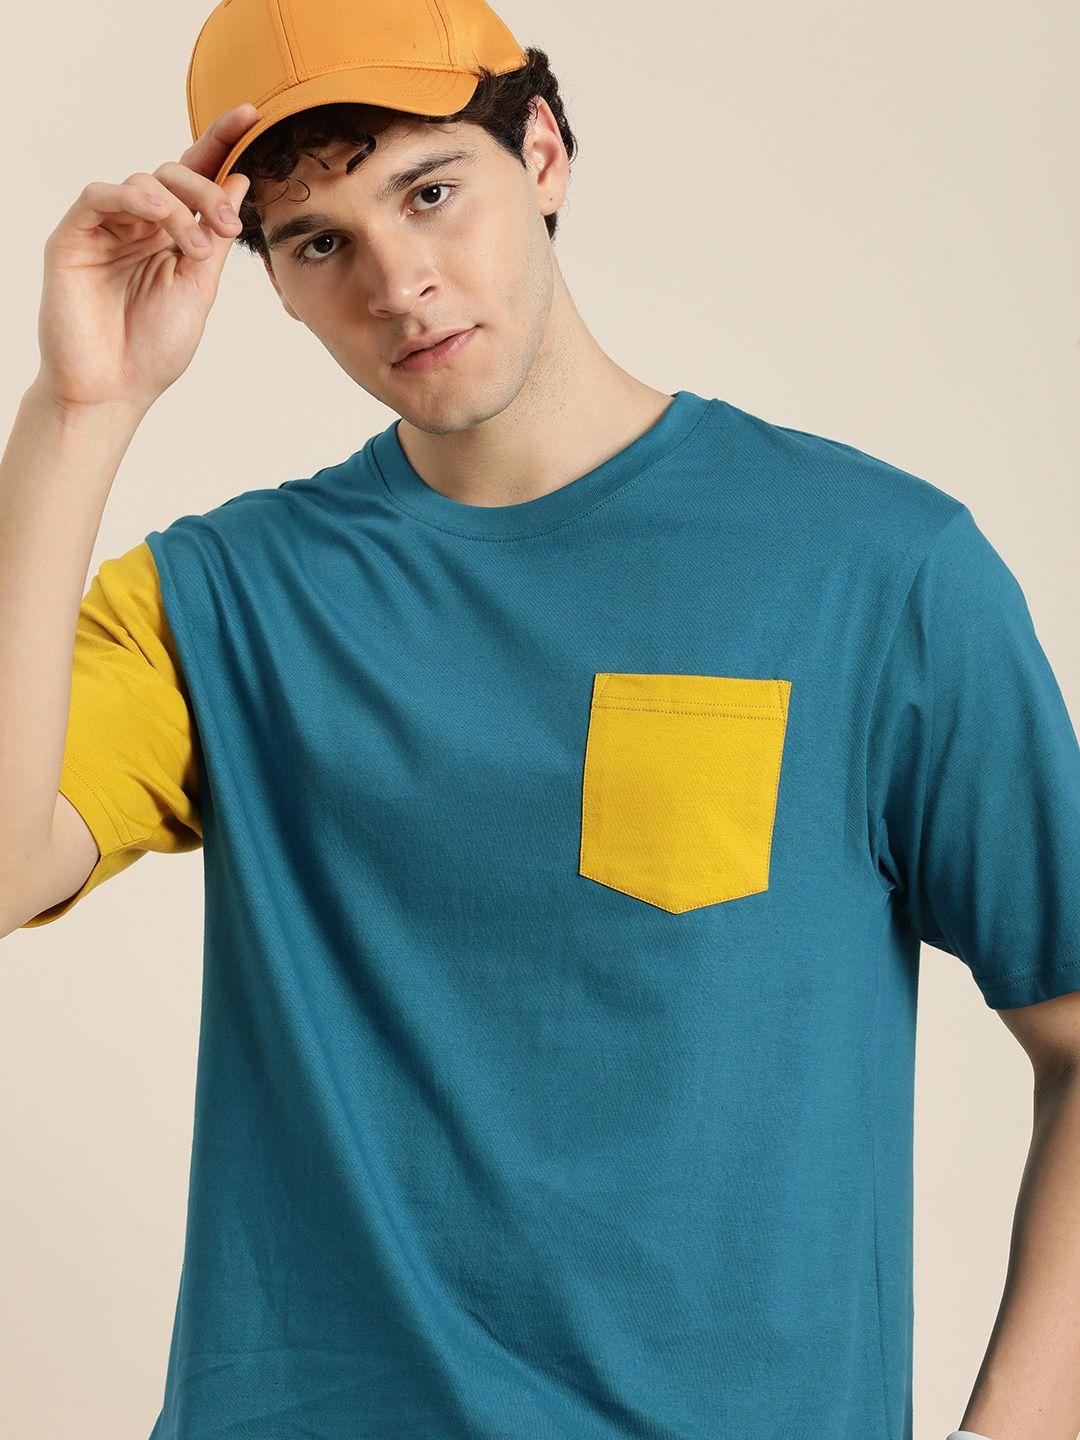 dillinger-men-colourblocked-relaxed-fit-t-shirt